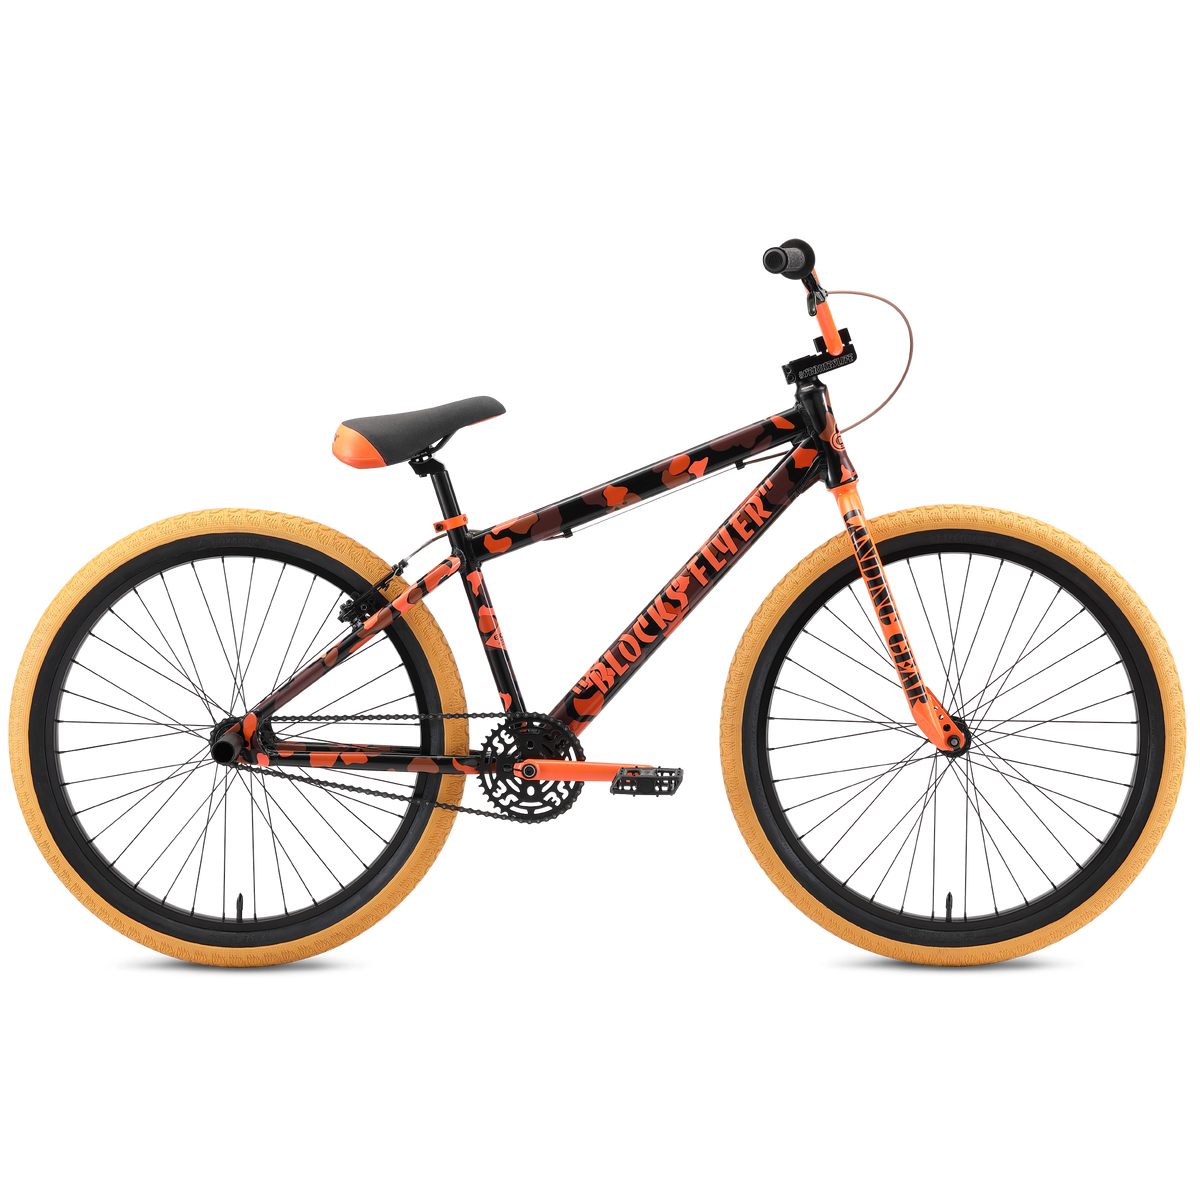 SE Blocks Flyer 26-inch BMX Freestyle Bike-Stealth Mode Black/Blue Ano –  J&R Bicycles, Inc.